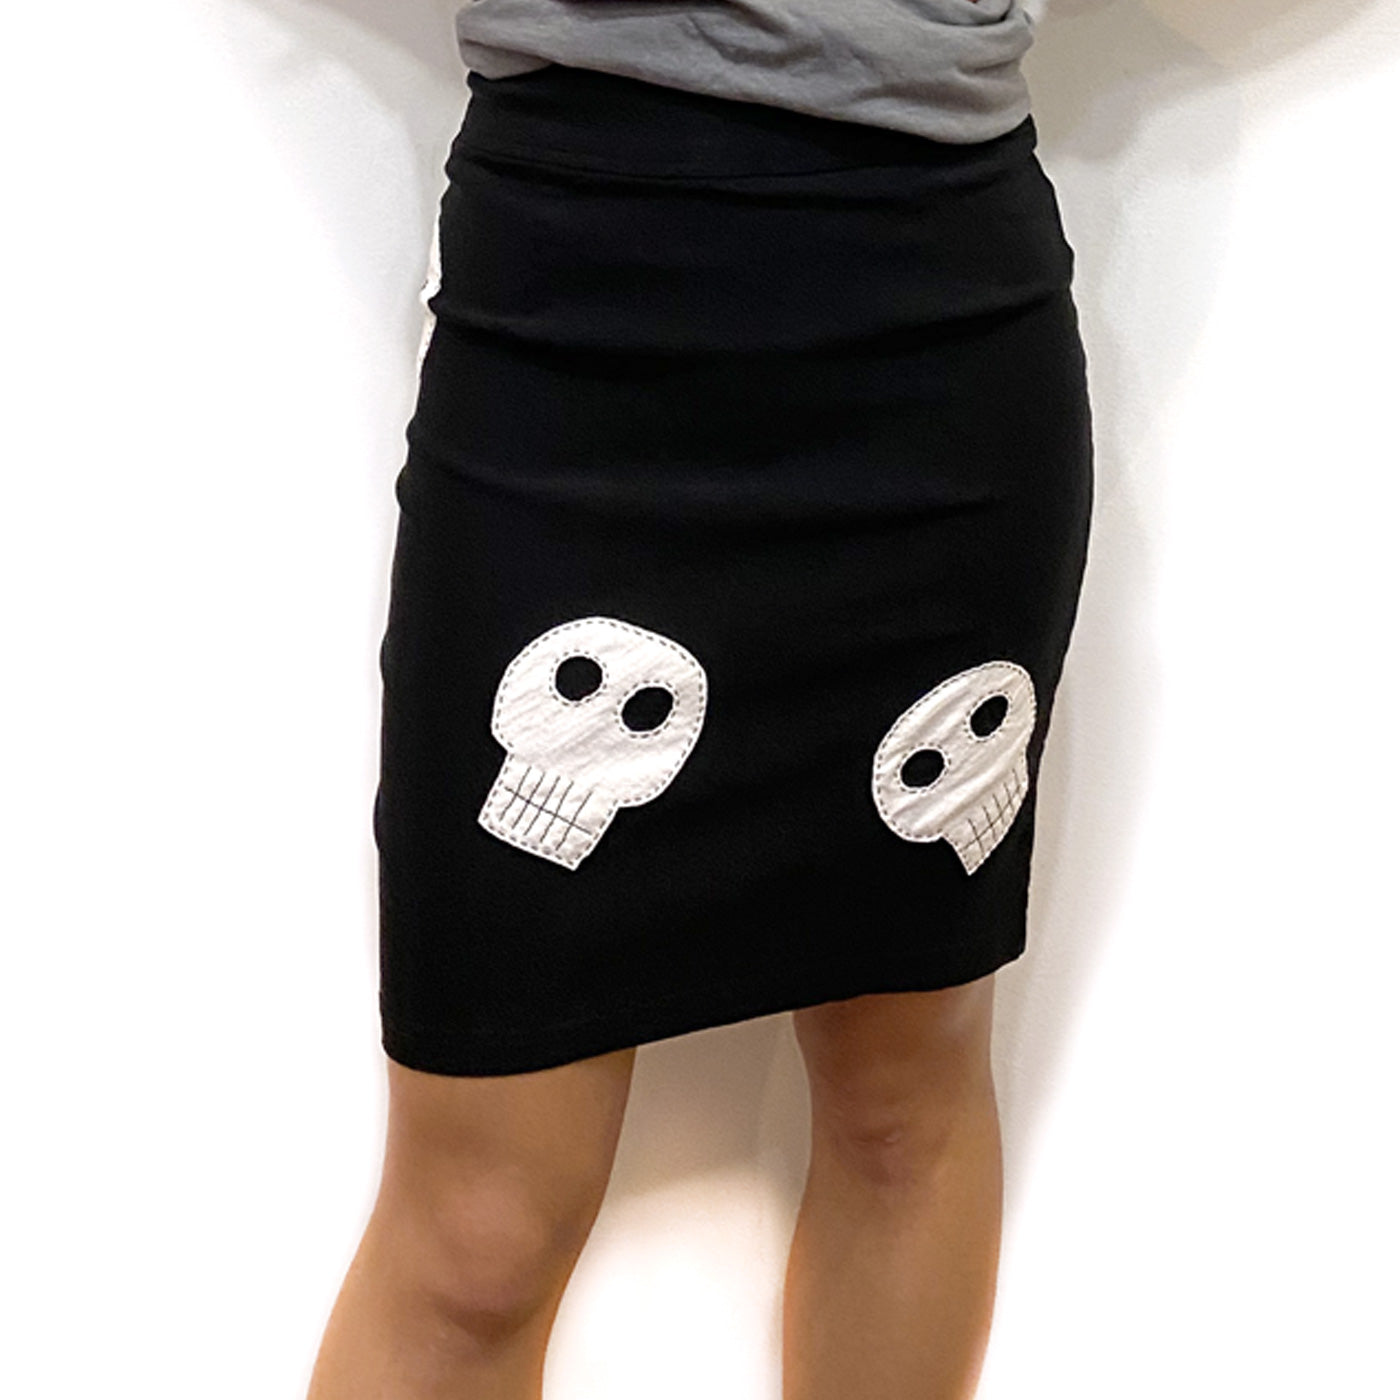 Black Skirt with Handsewn Skulls